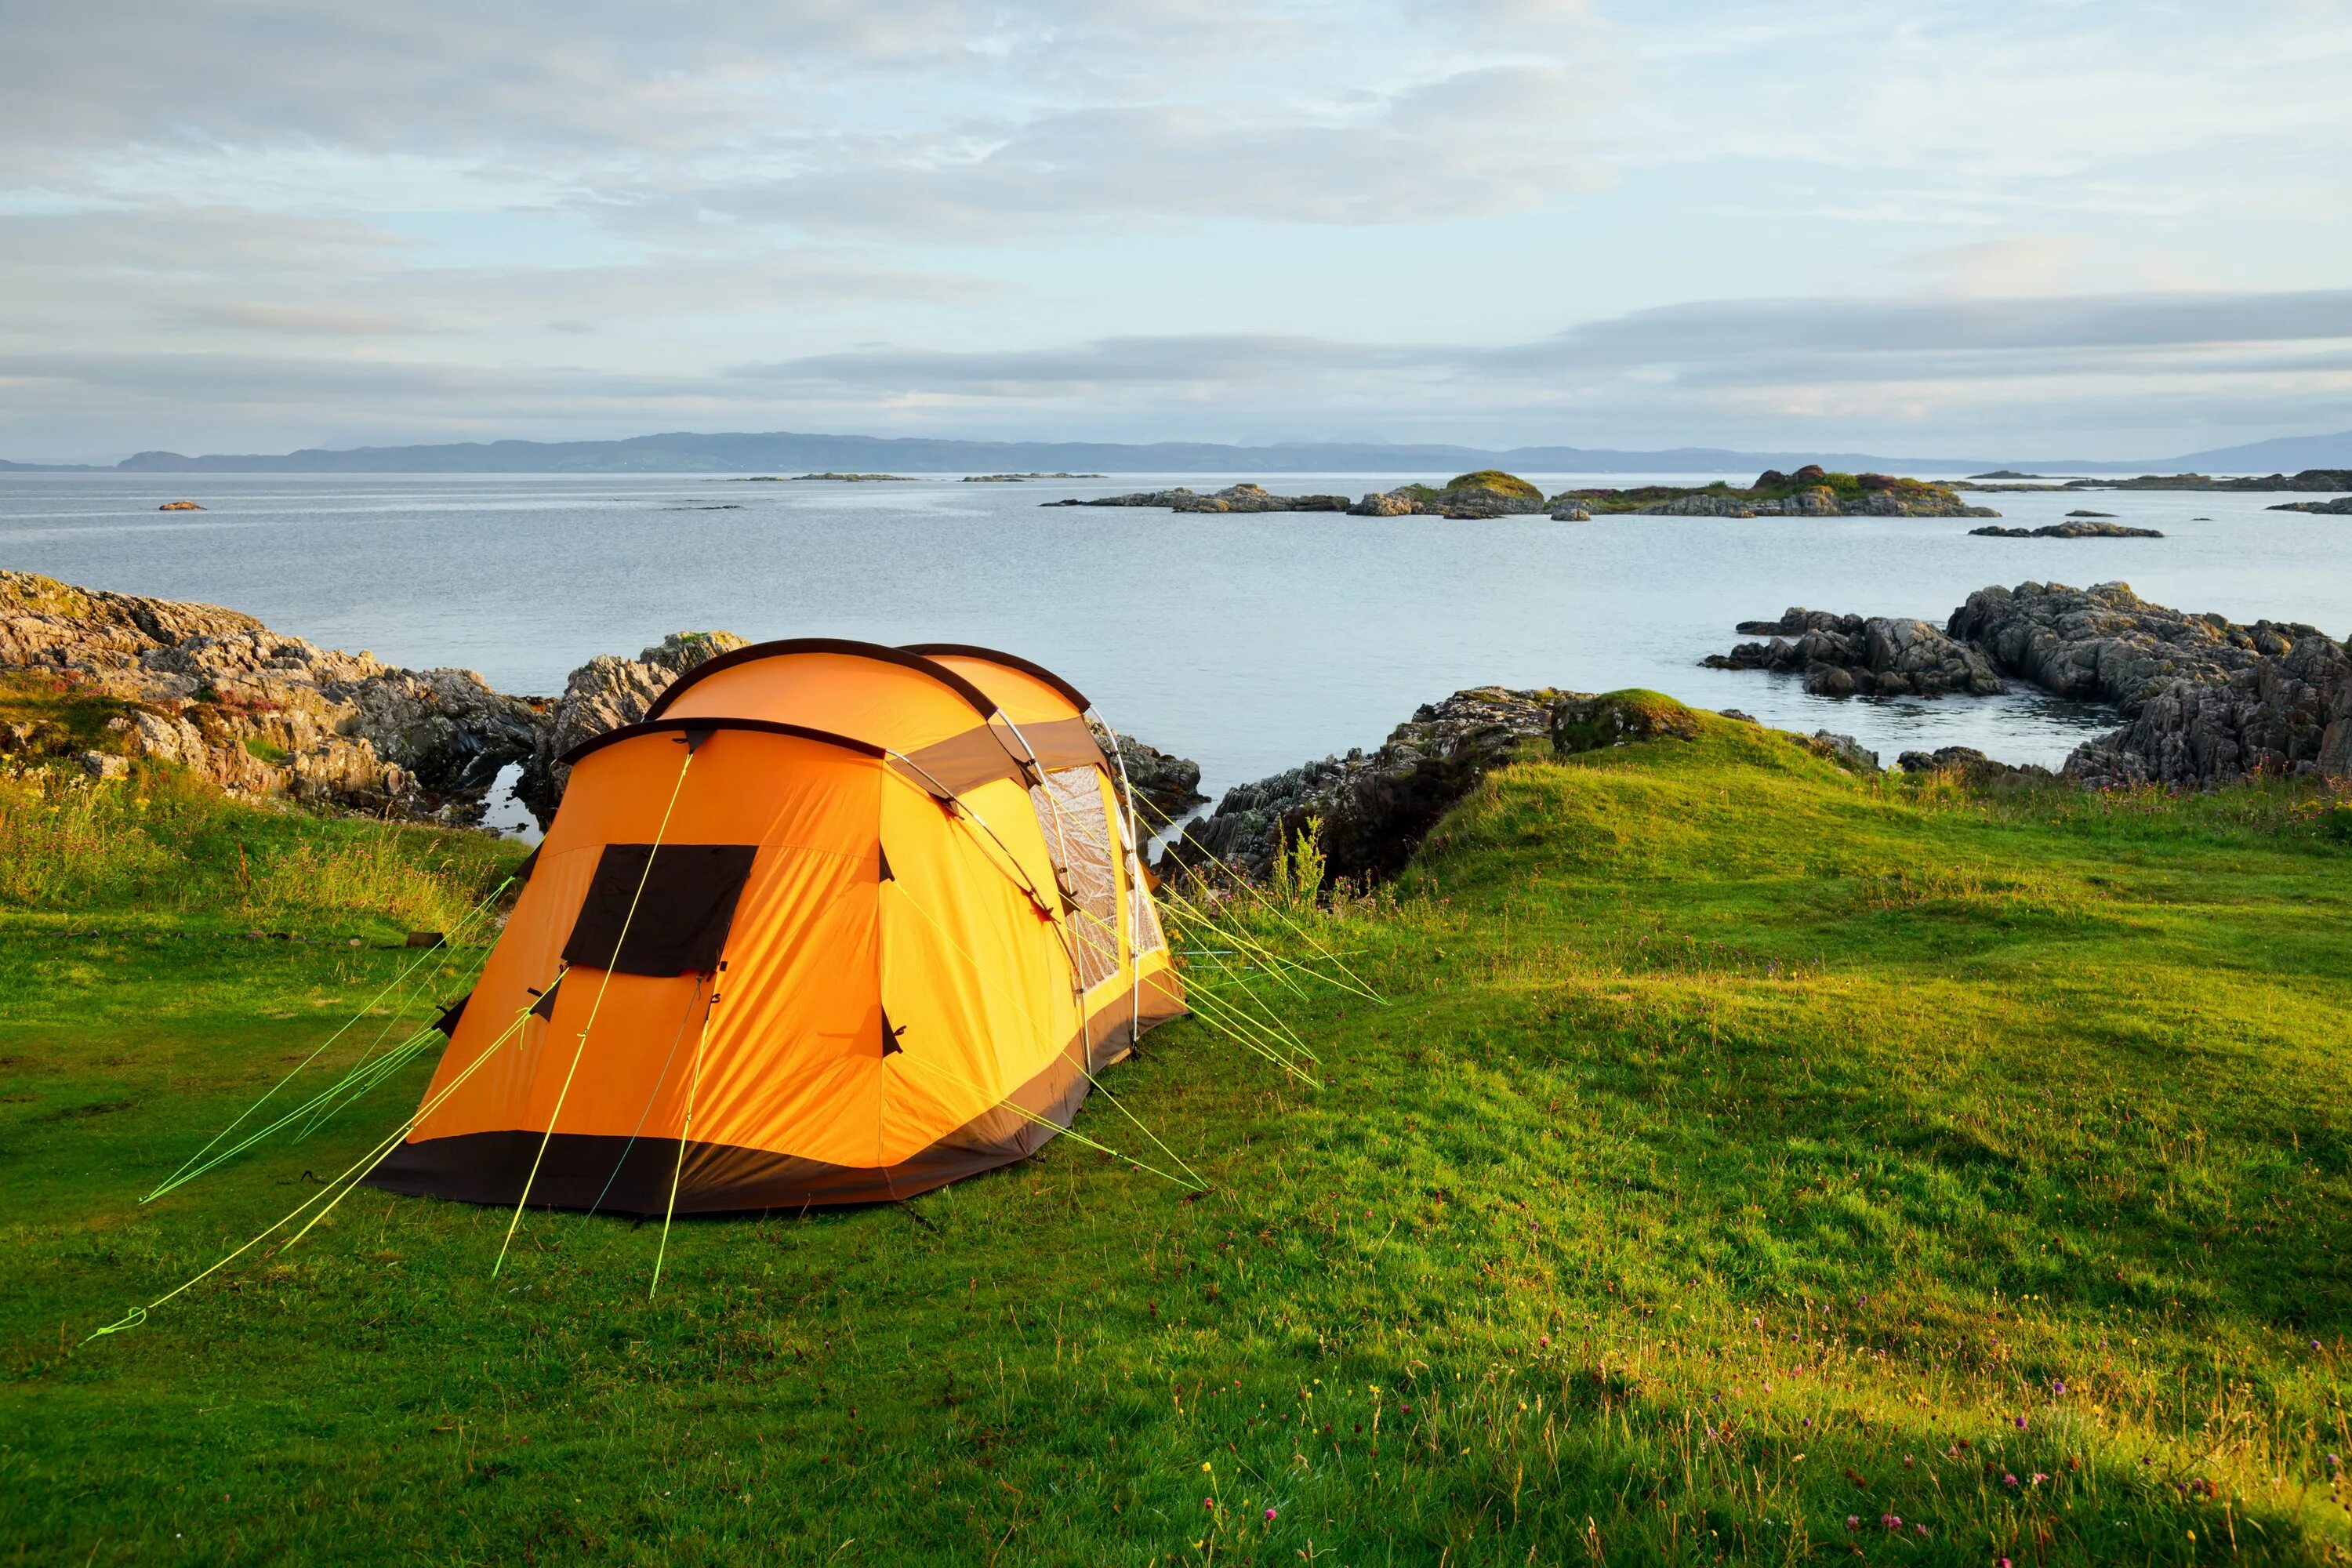 Photo camp. Палатка на природе. Кемпинг. Палатки для кемпинга. Кемпинг на природе.